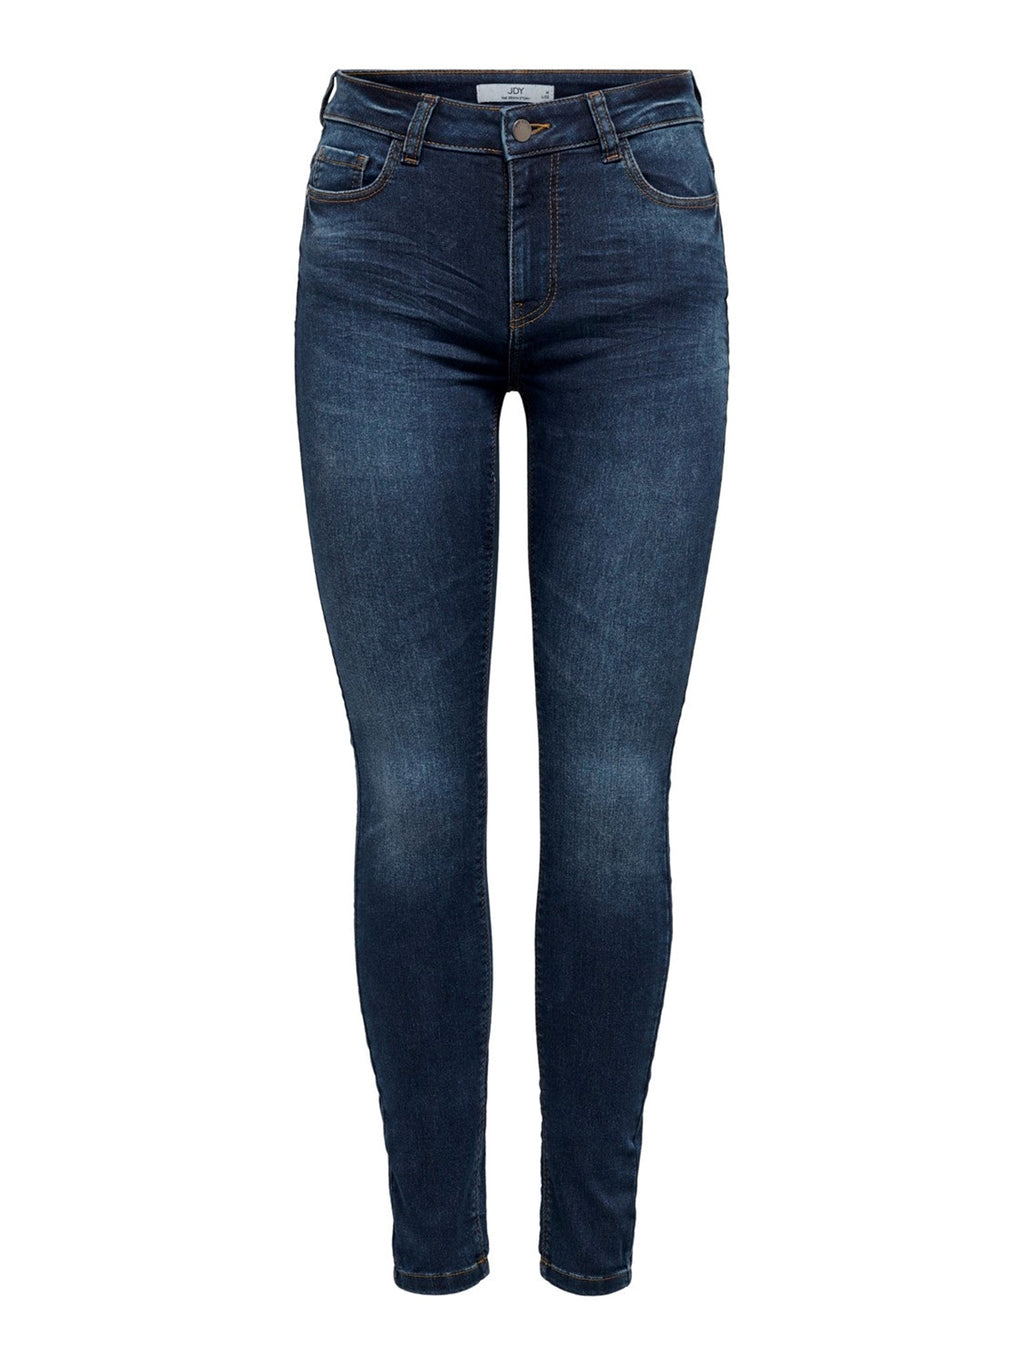 Performance Jeans - Blå denim (mid waist)